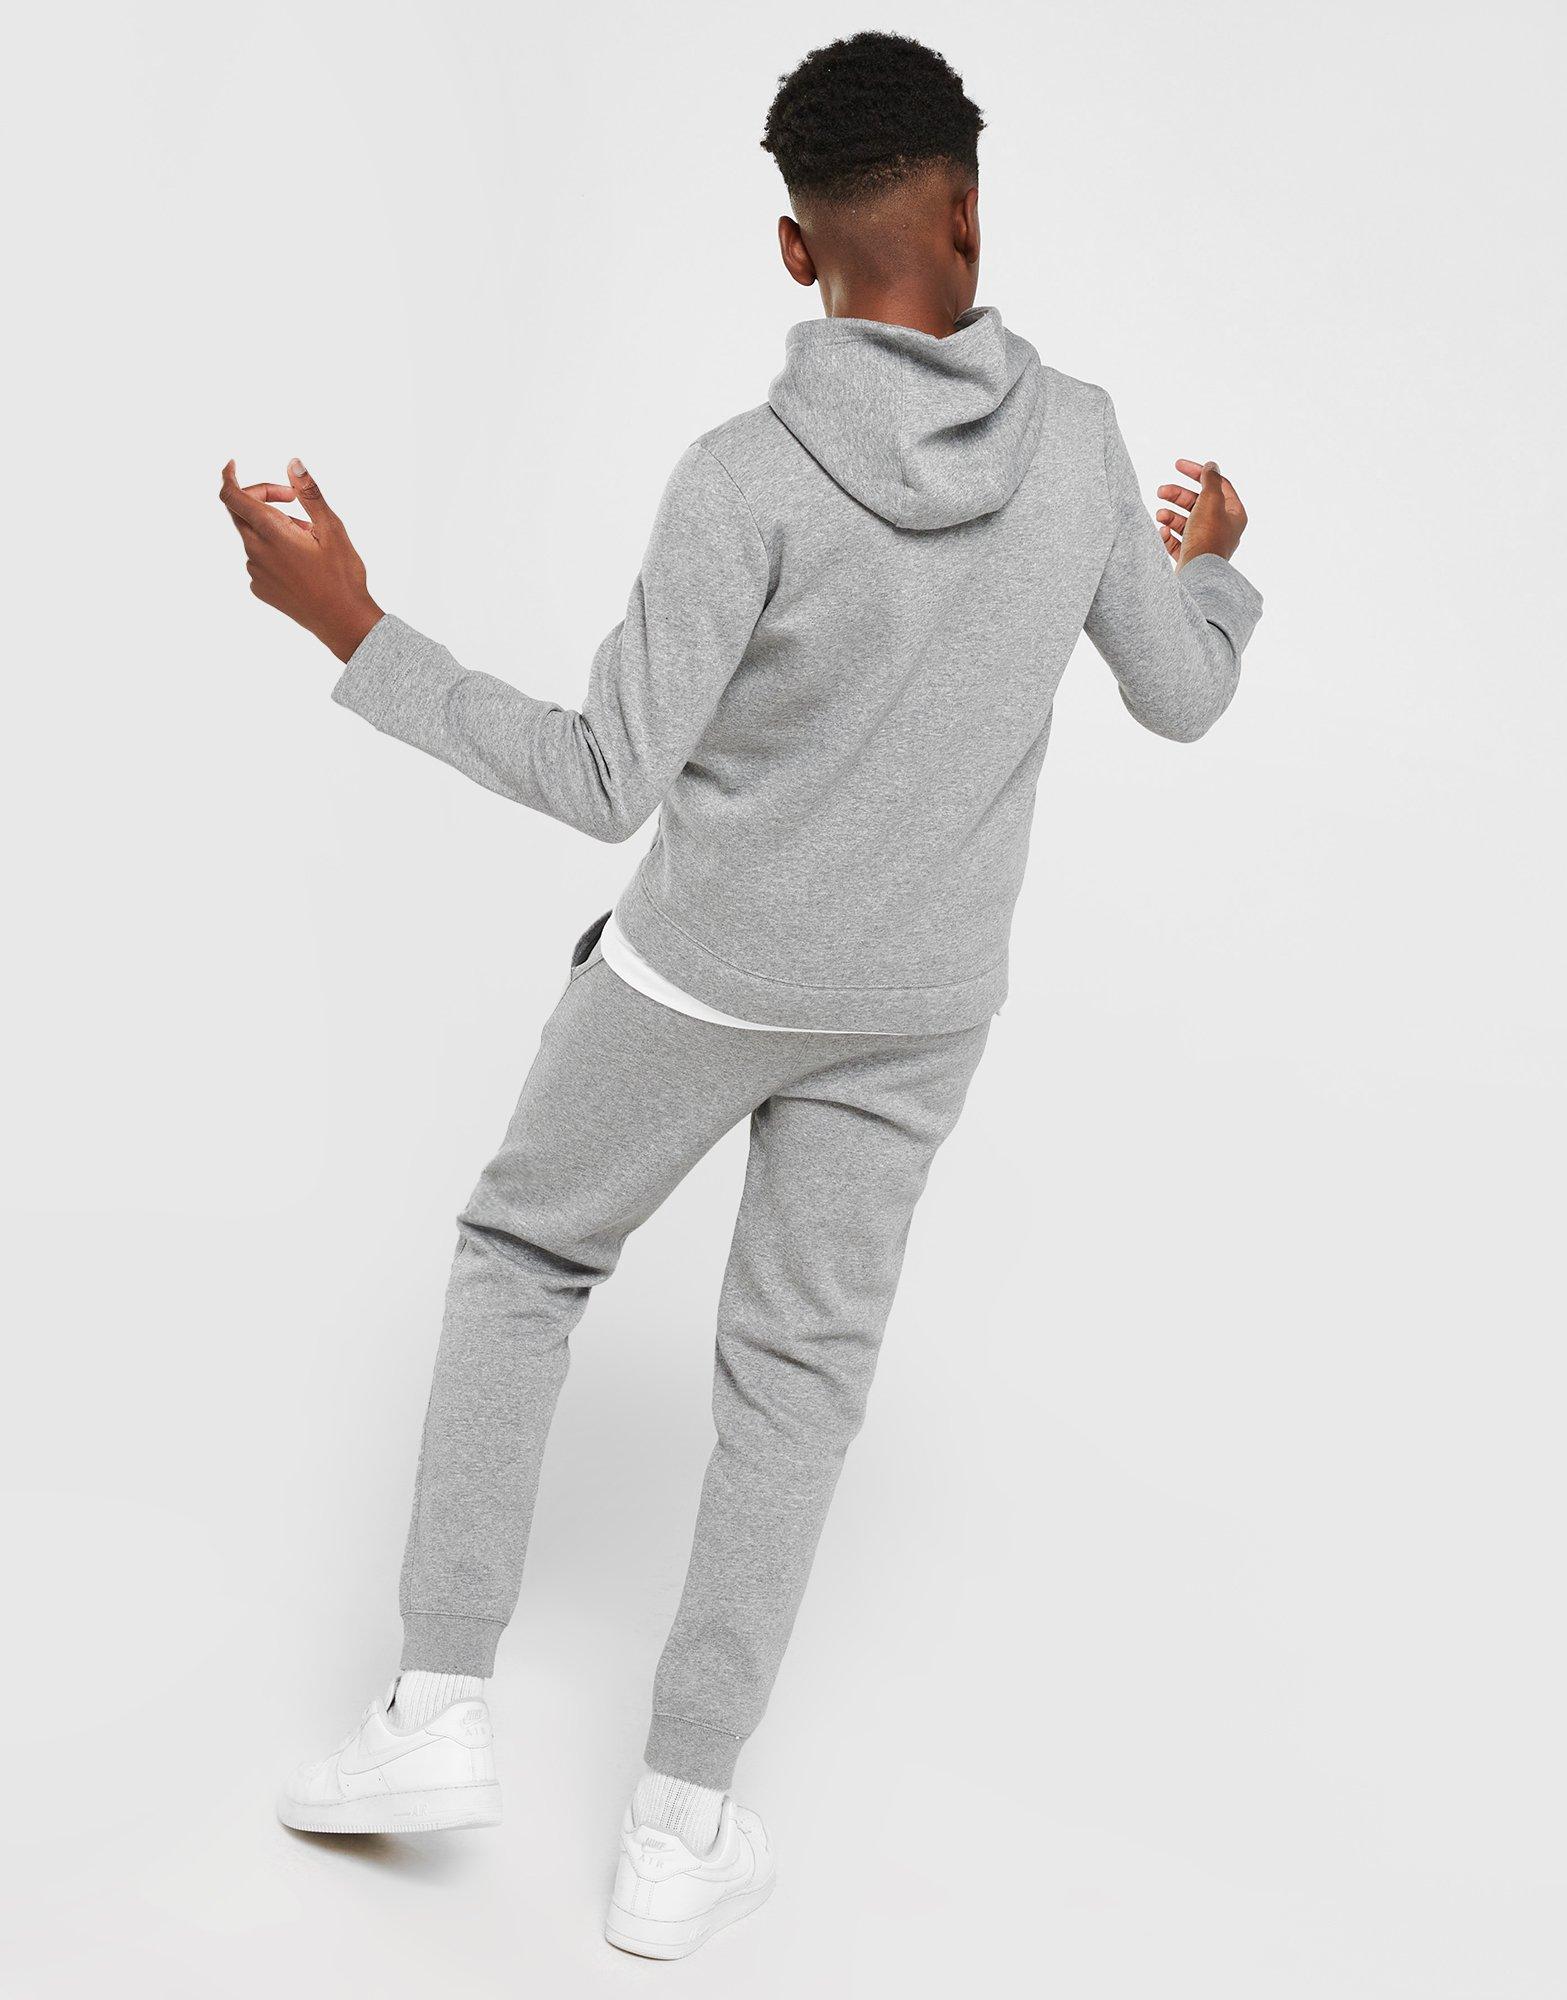 Grau JD Nike Fleece Trainingsanzug Deutschland Sports Kinder - Sportswear